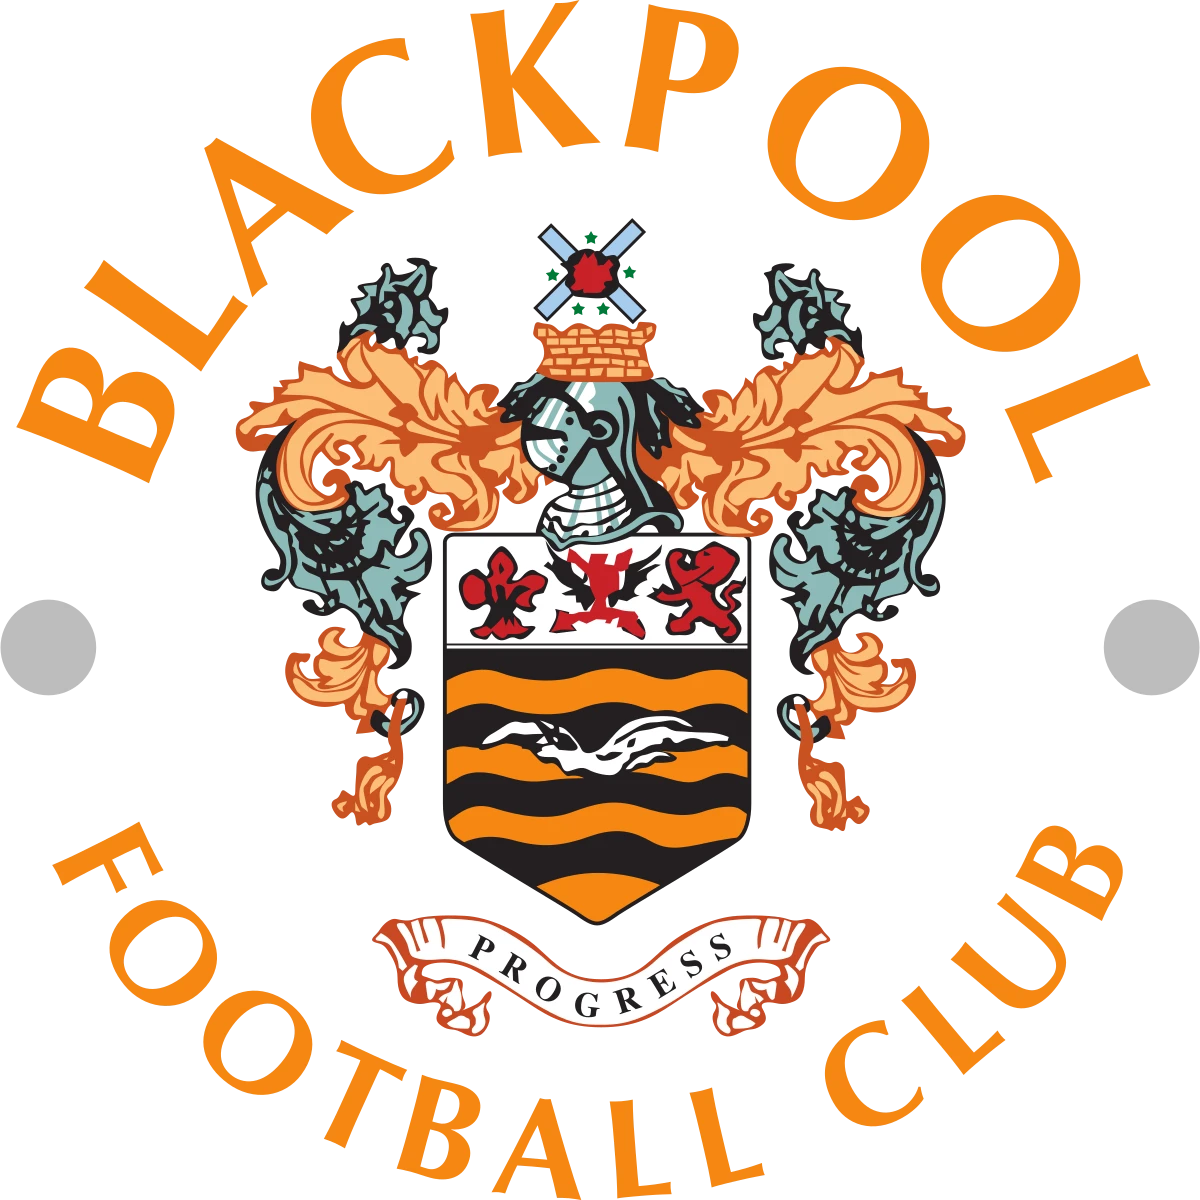 Blackpool Football Club Logo